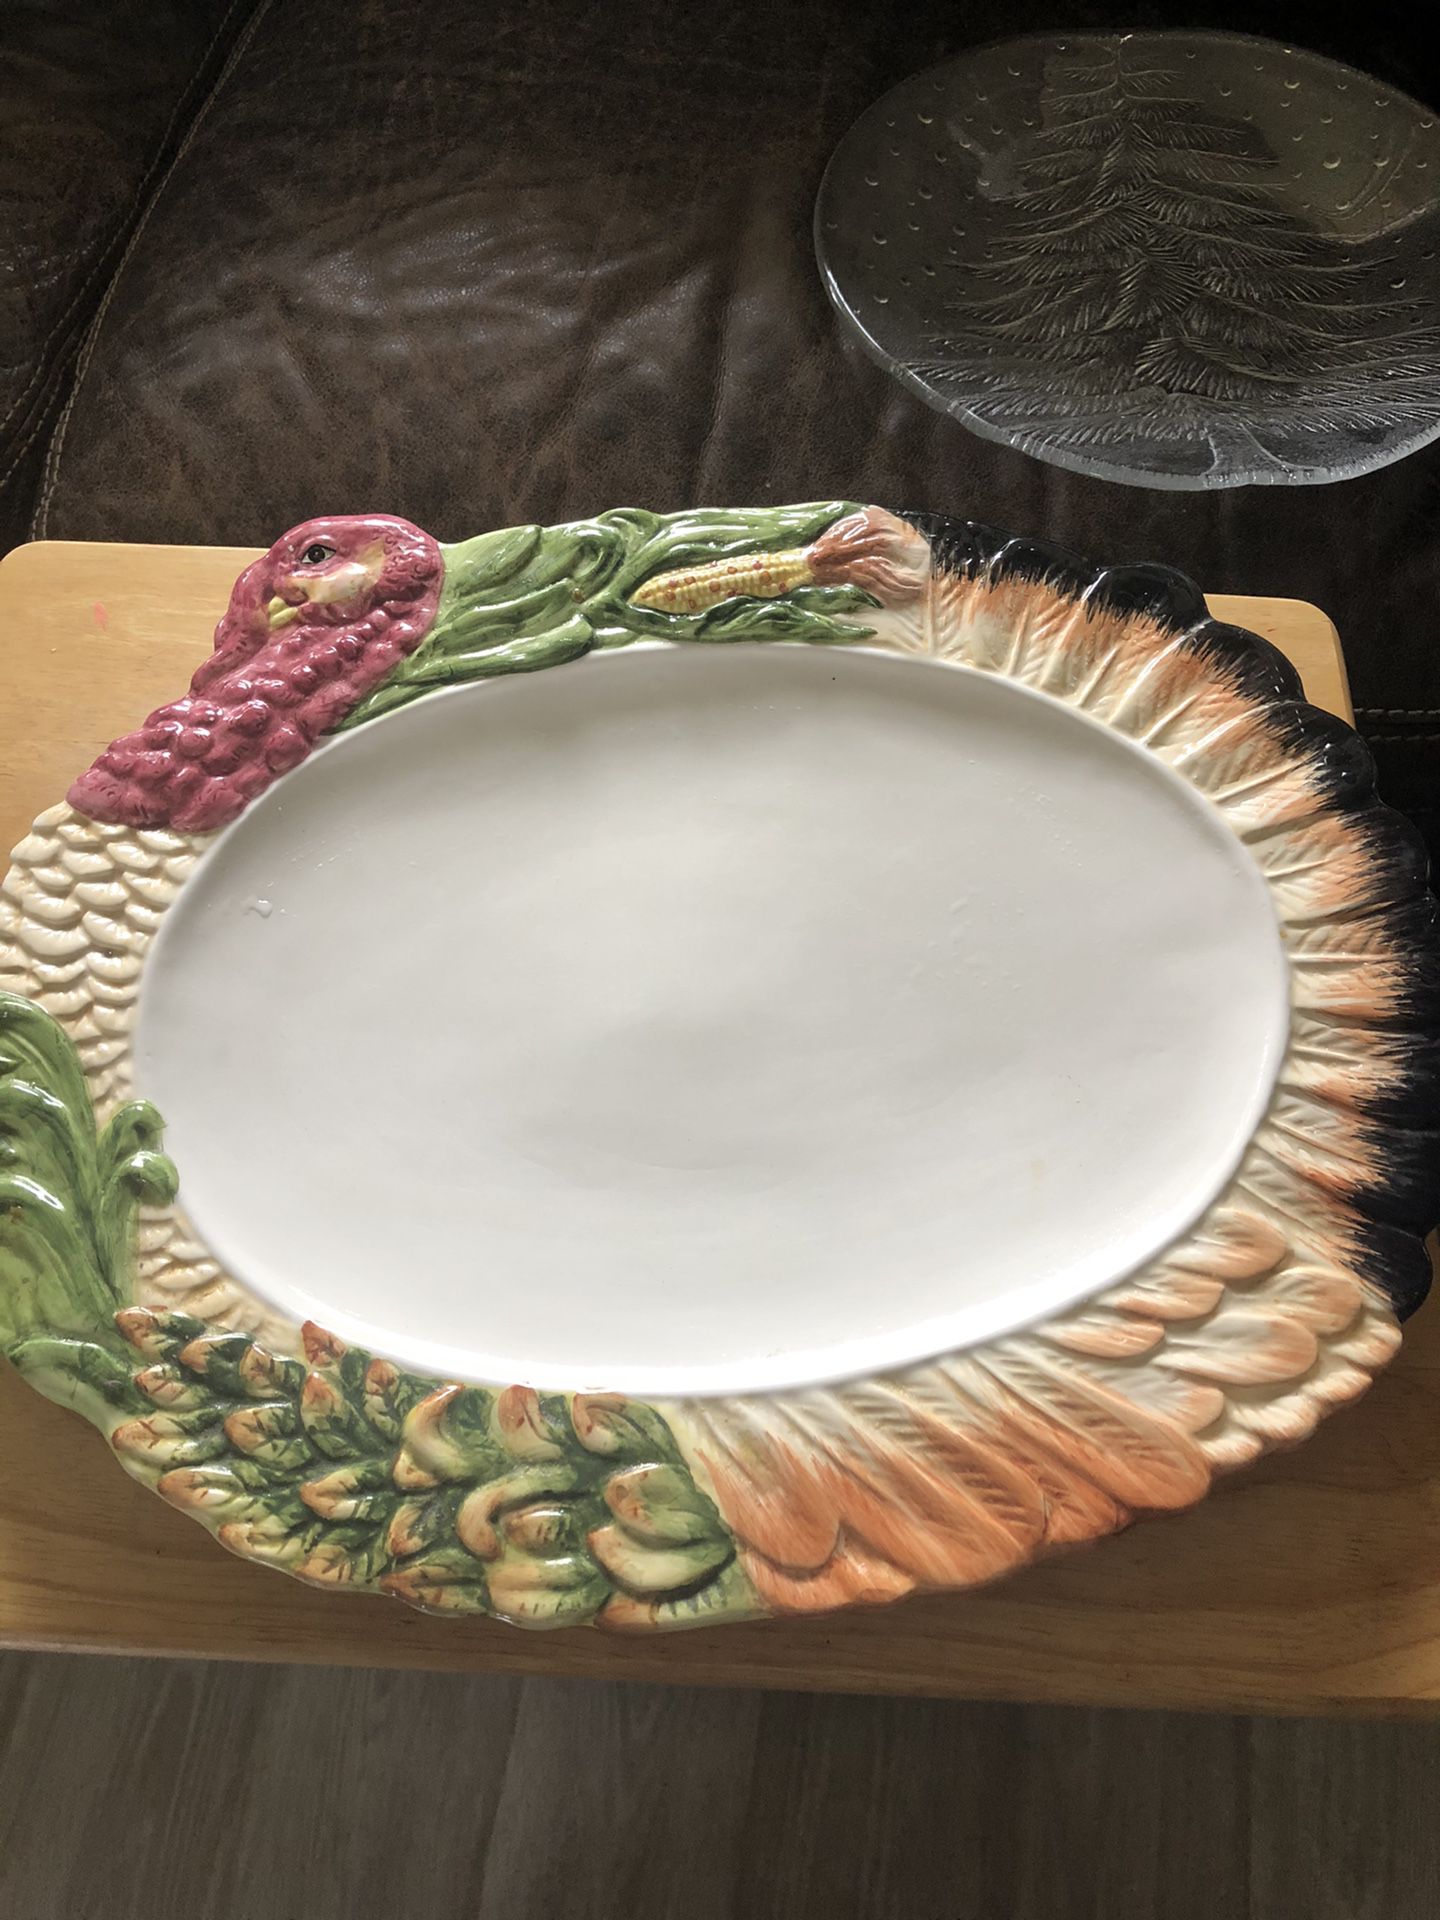 $$25 For All., turkey platter, Xmas platter and bowls.